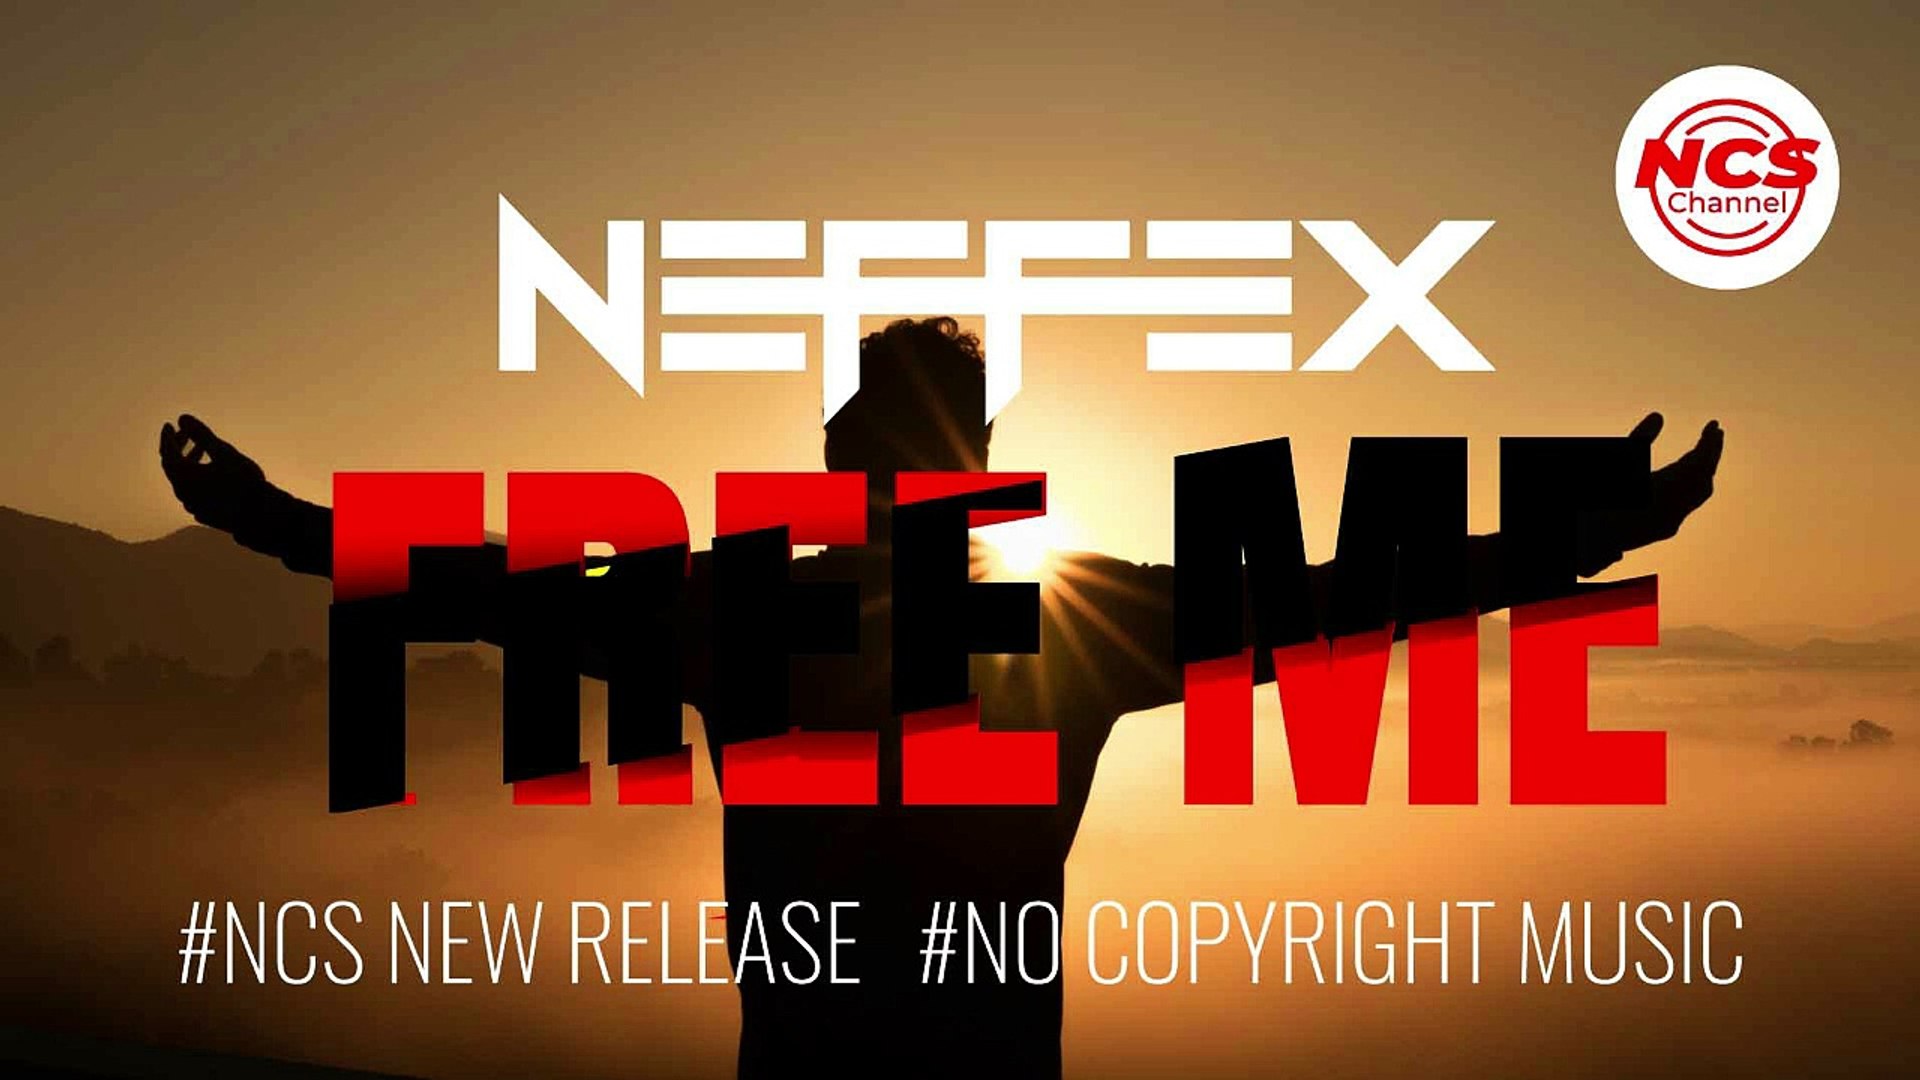 NEFFEX Free Me - Video Dailymotion